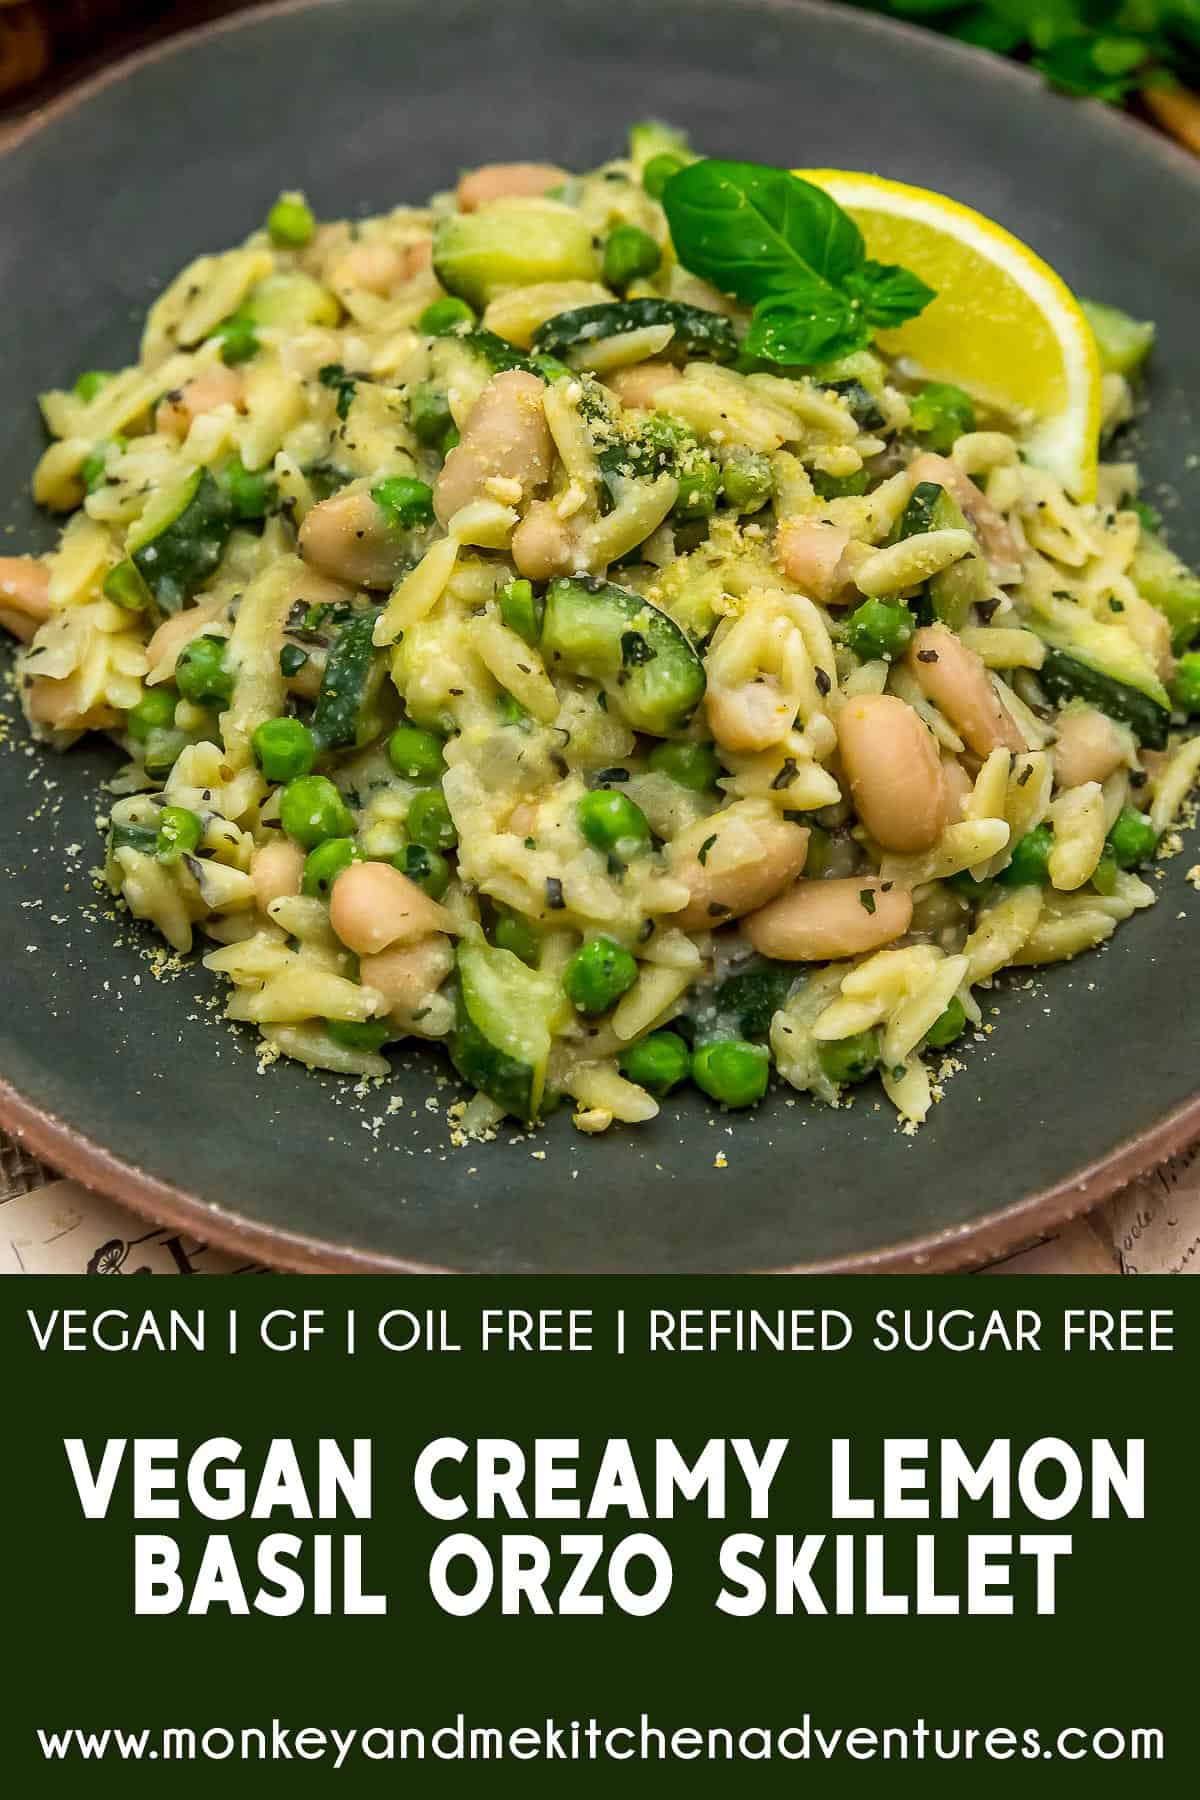 Vegan Creamy Lemon Basil Orzo Skillet with text description